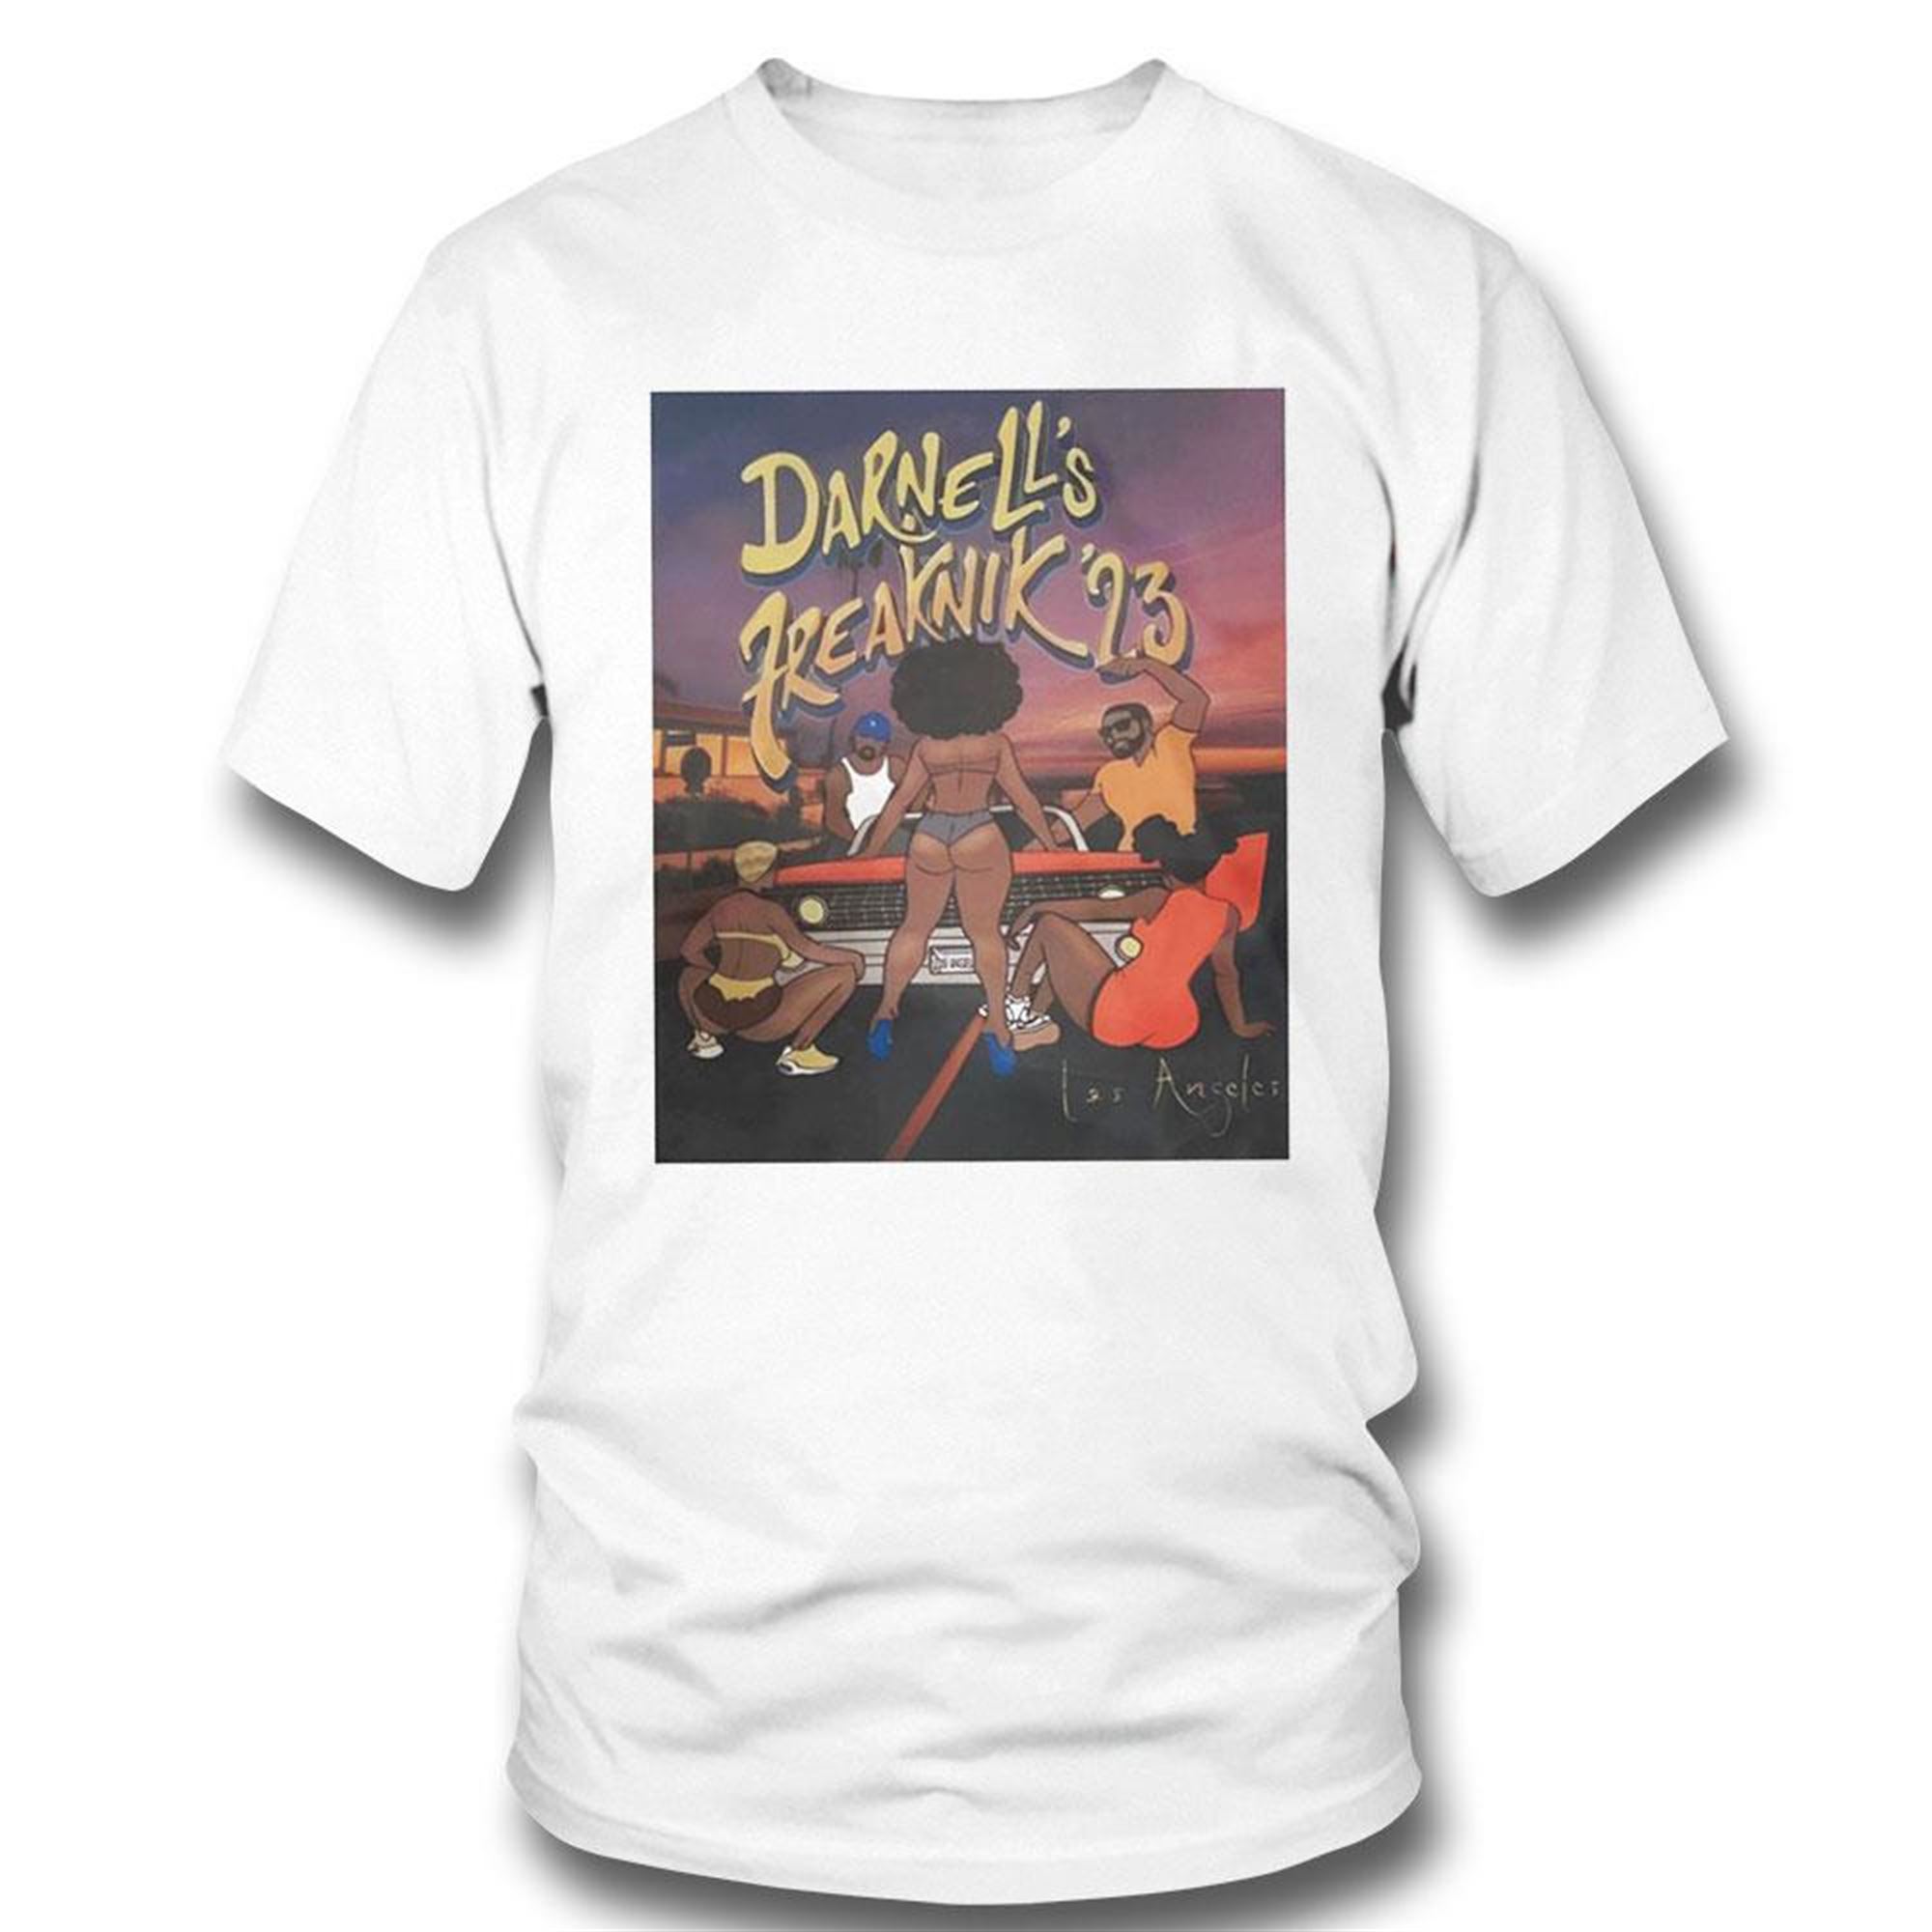 Darnells Freaknik 23 Los Angeles Funny Shirt